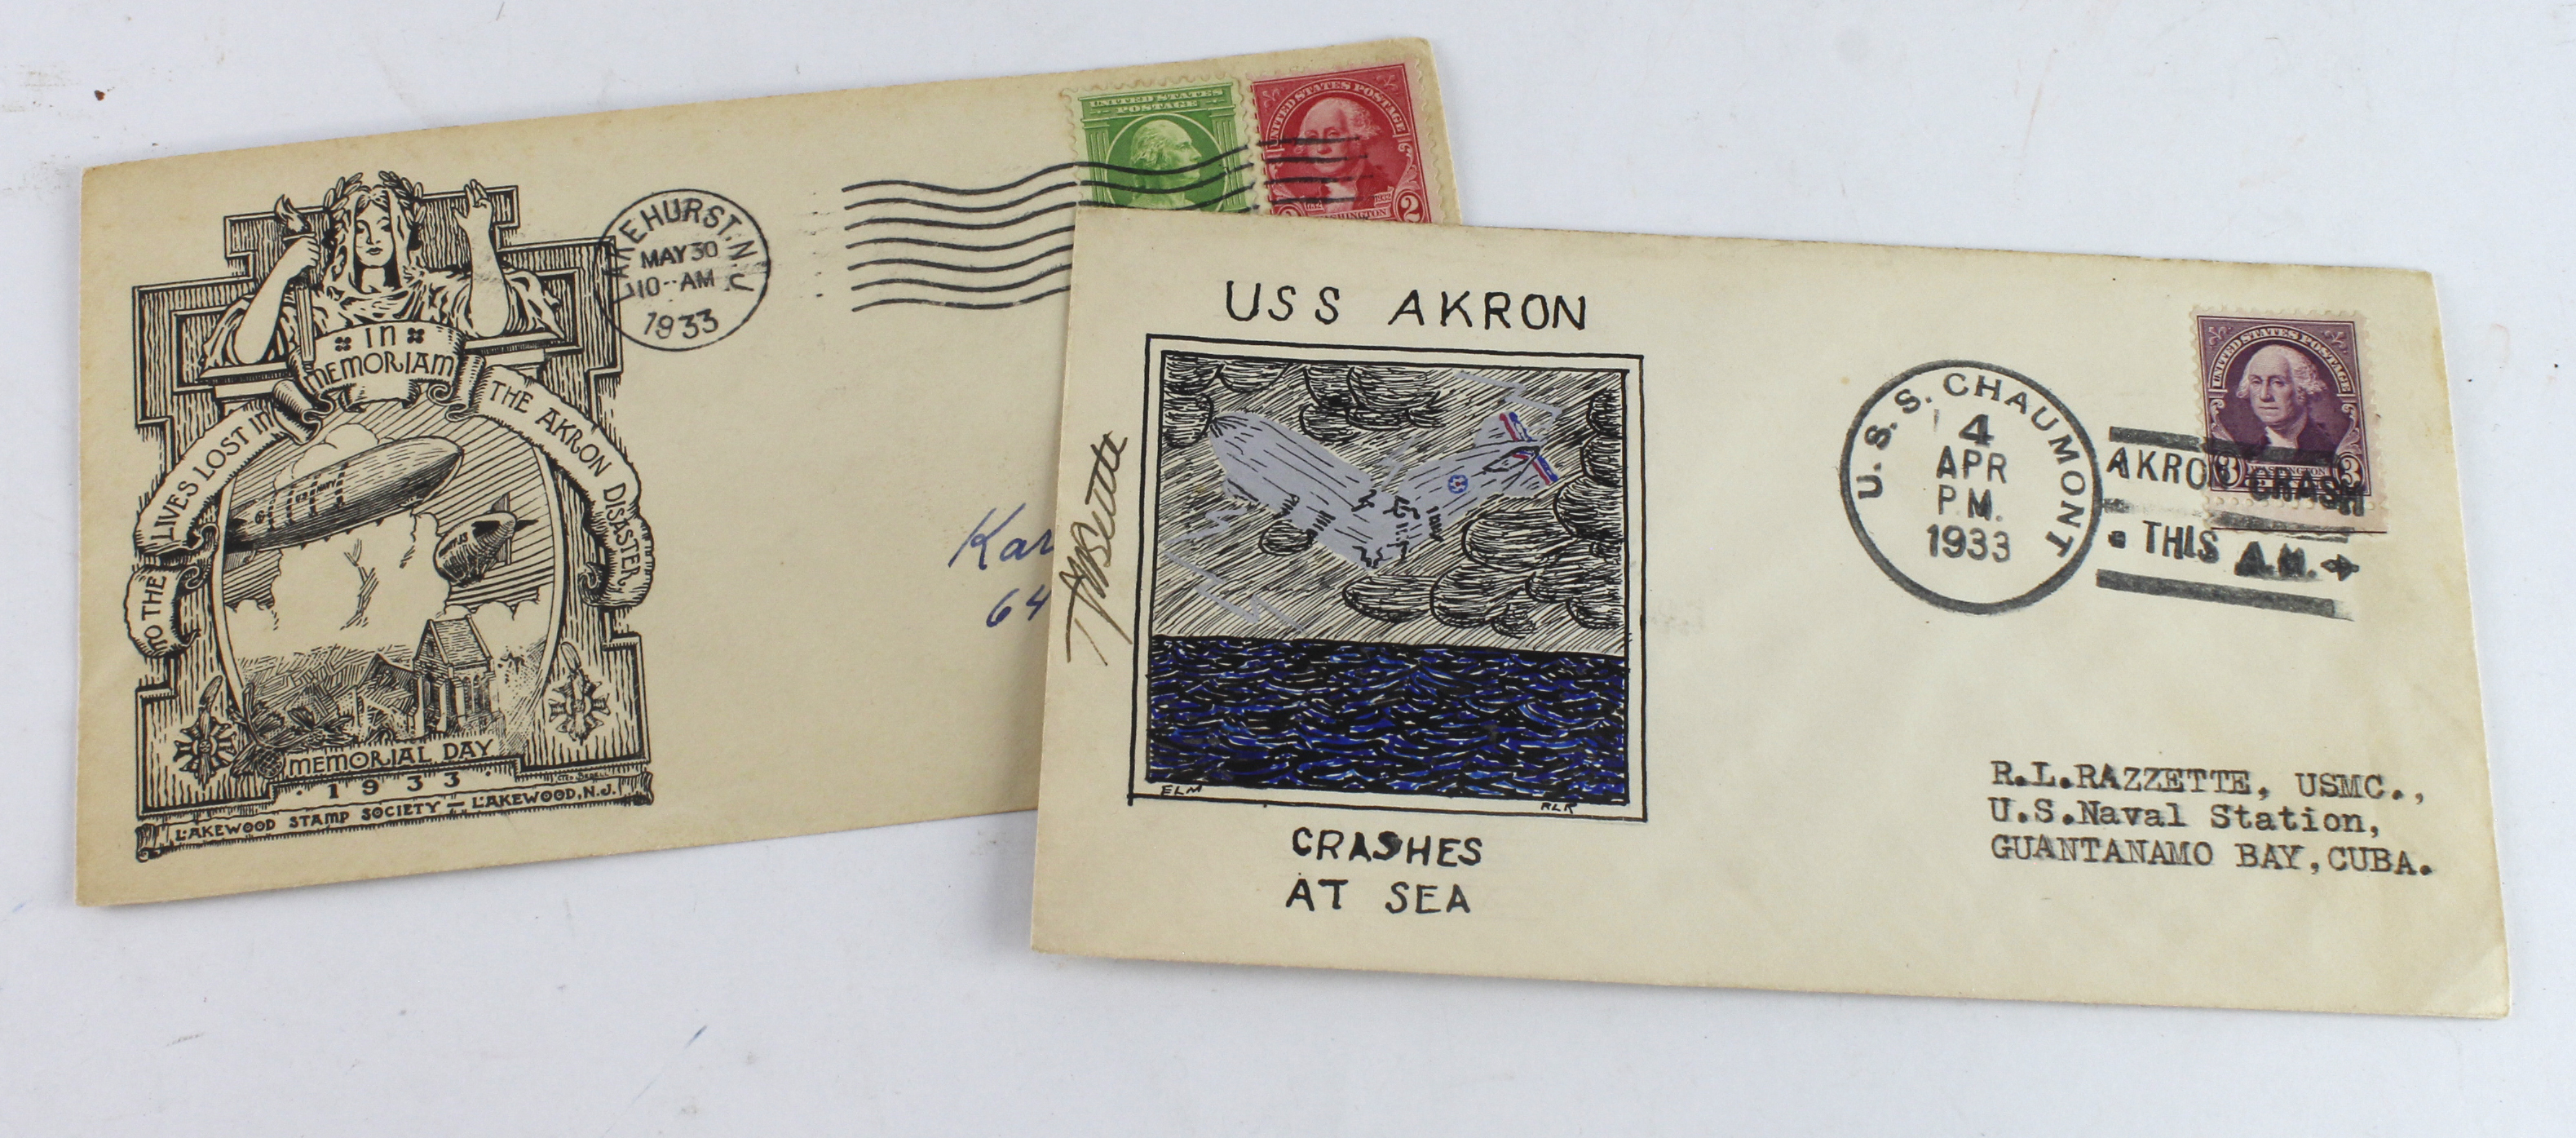 Airship commemorative Crash covers - USS Akron 1933 scarce (2)